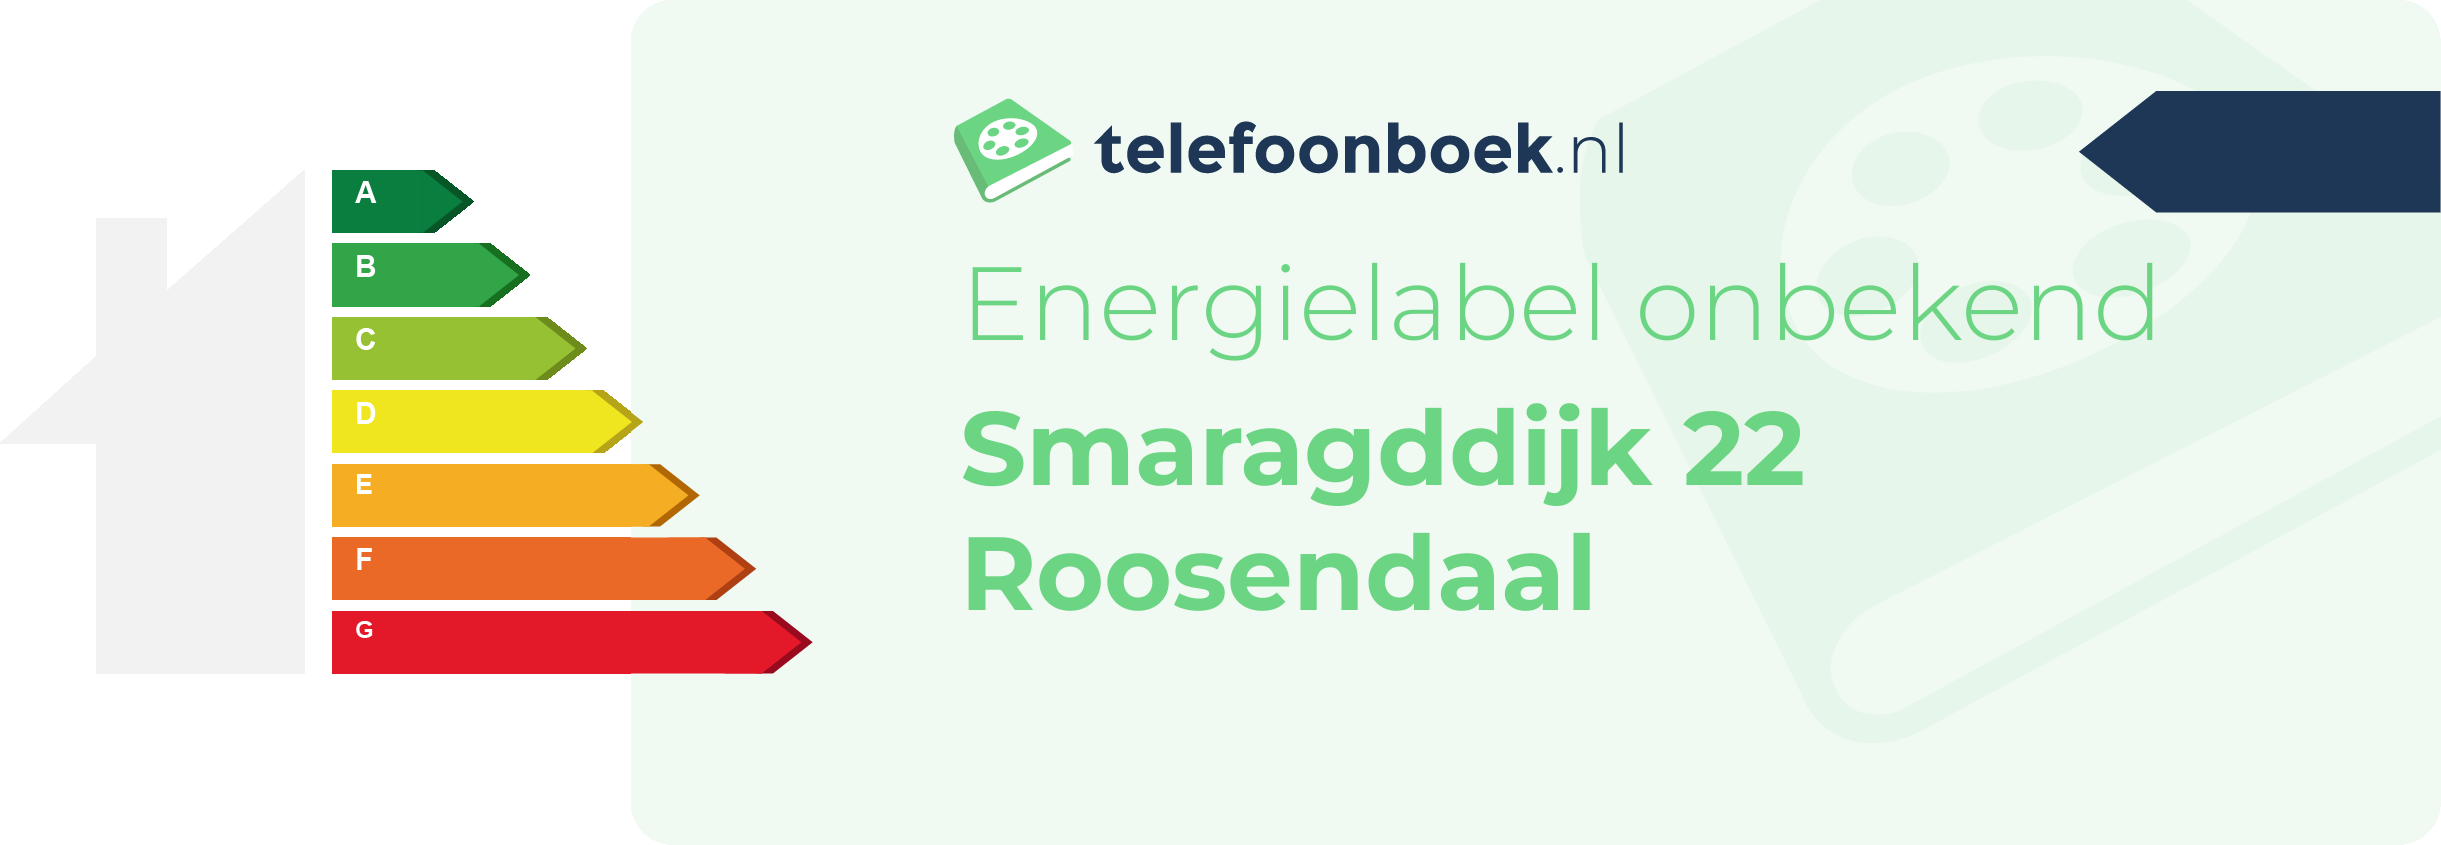 Energielabel Smaragddijk 22 Roosendaal